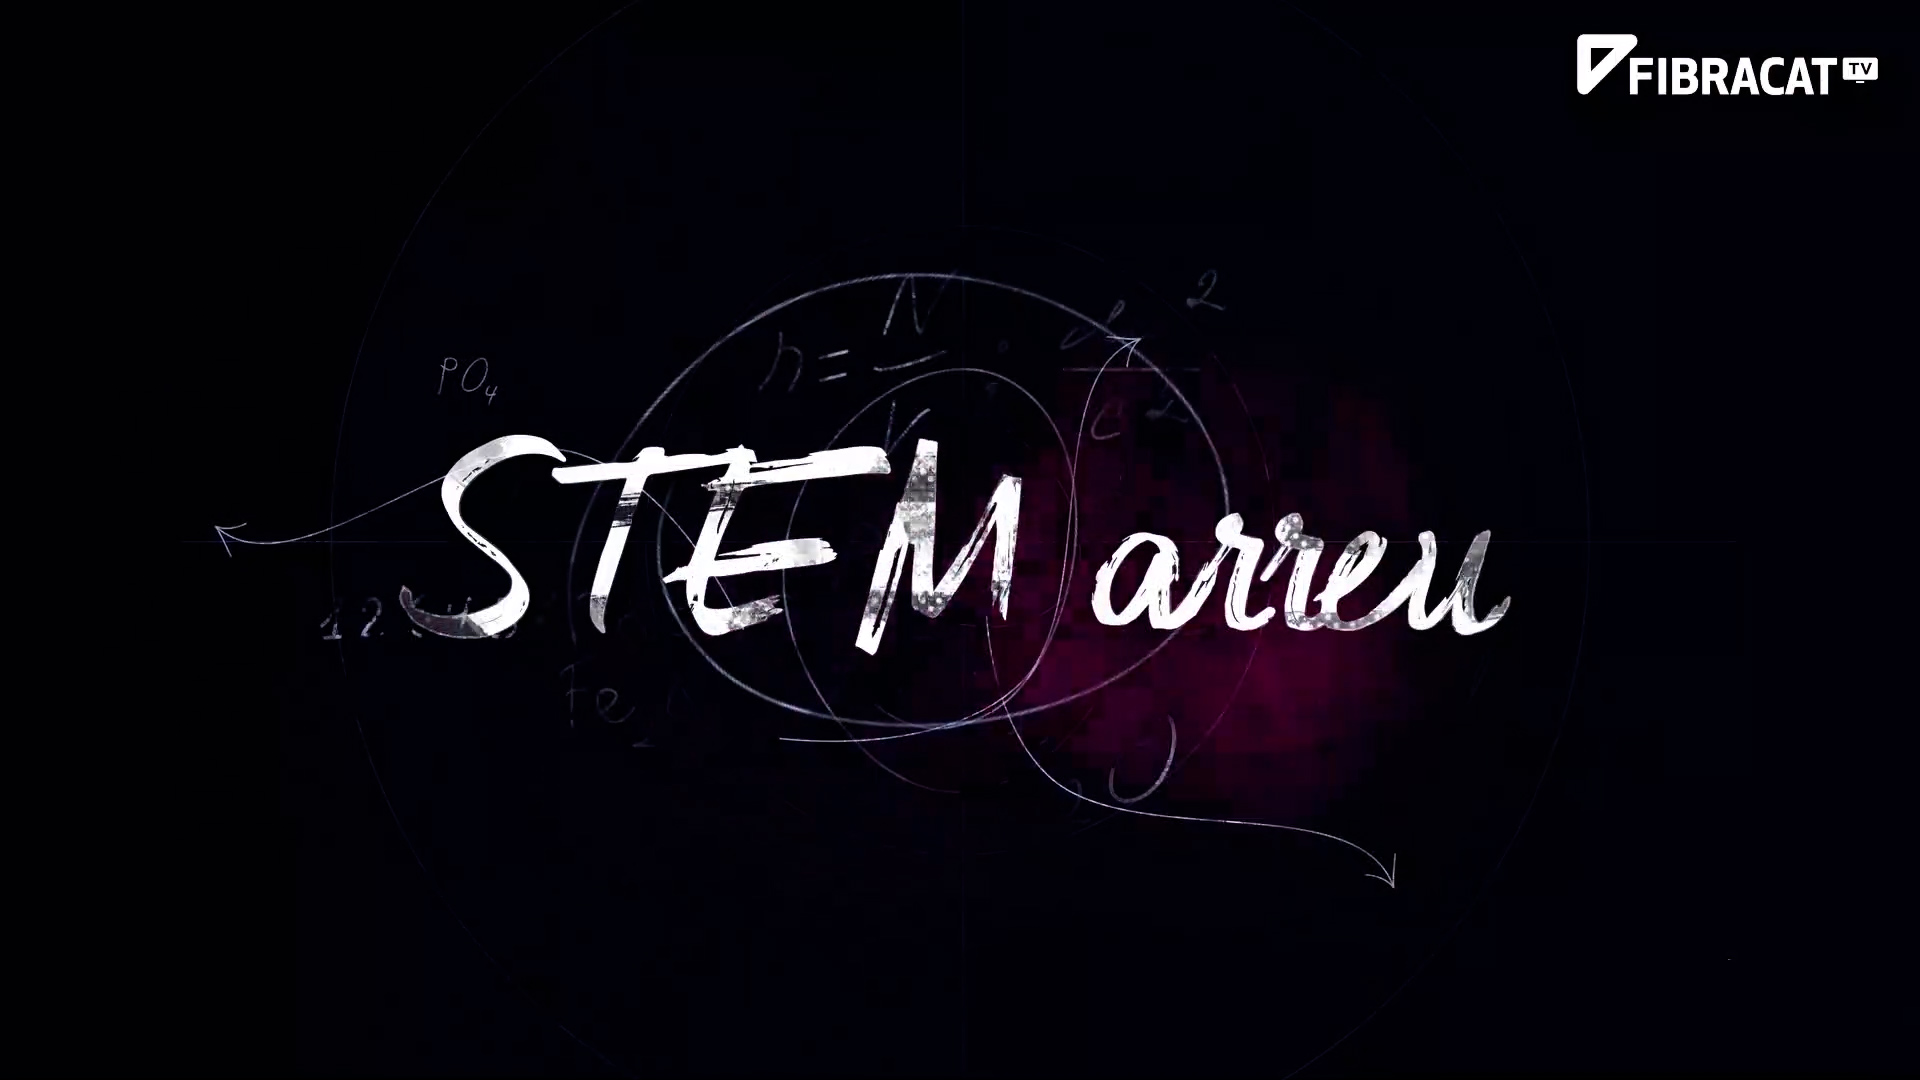 STEM Arreu & STEM Aqui